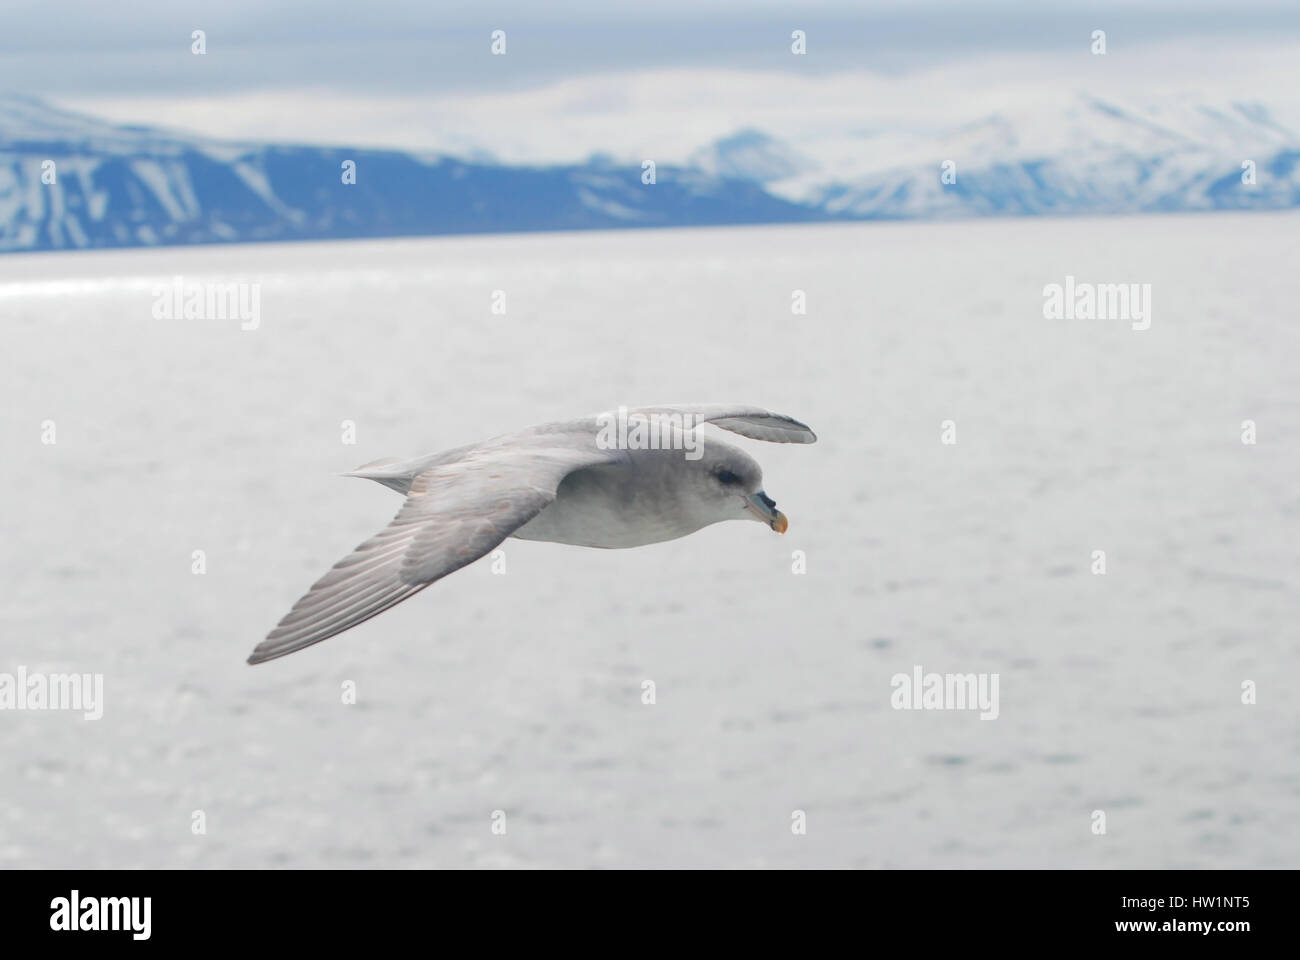 Northern arctic fulmar bird gliding over the arctic sea, Svalbard, Stock Photo